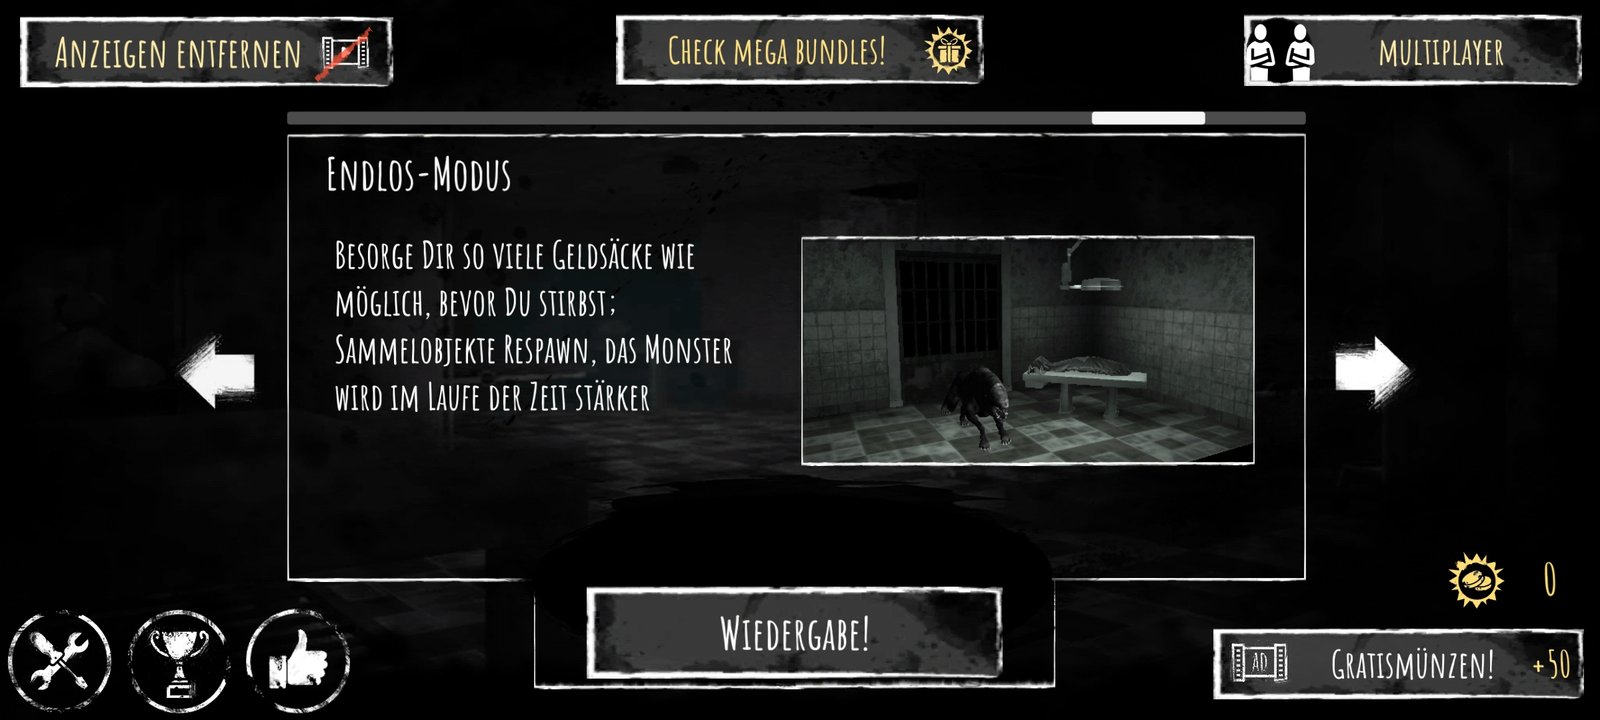 Eyes: Scary Thriller - Creepy Horror Game Mod Apk (All Unlocked)